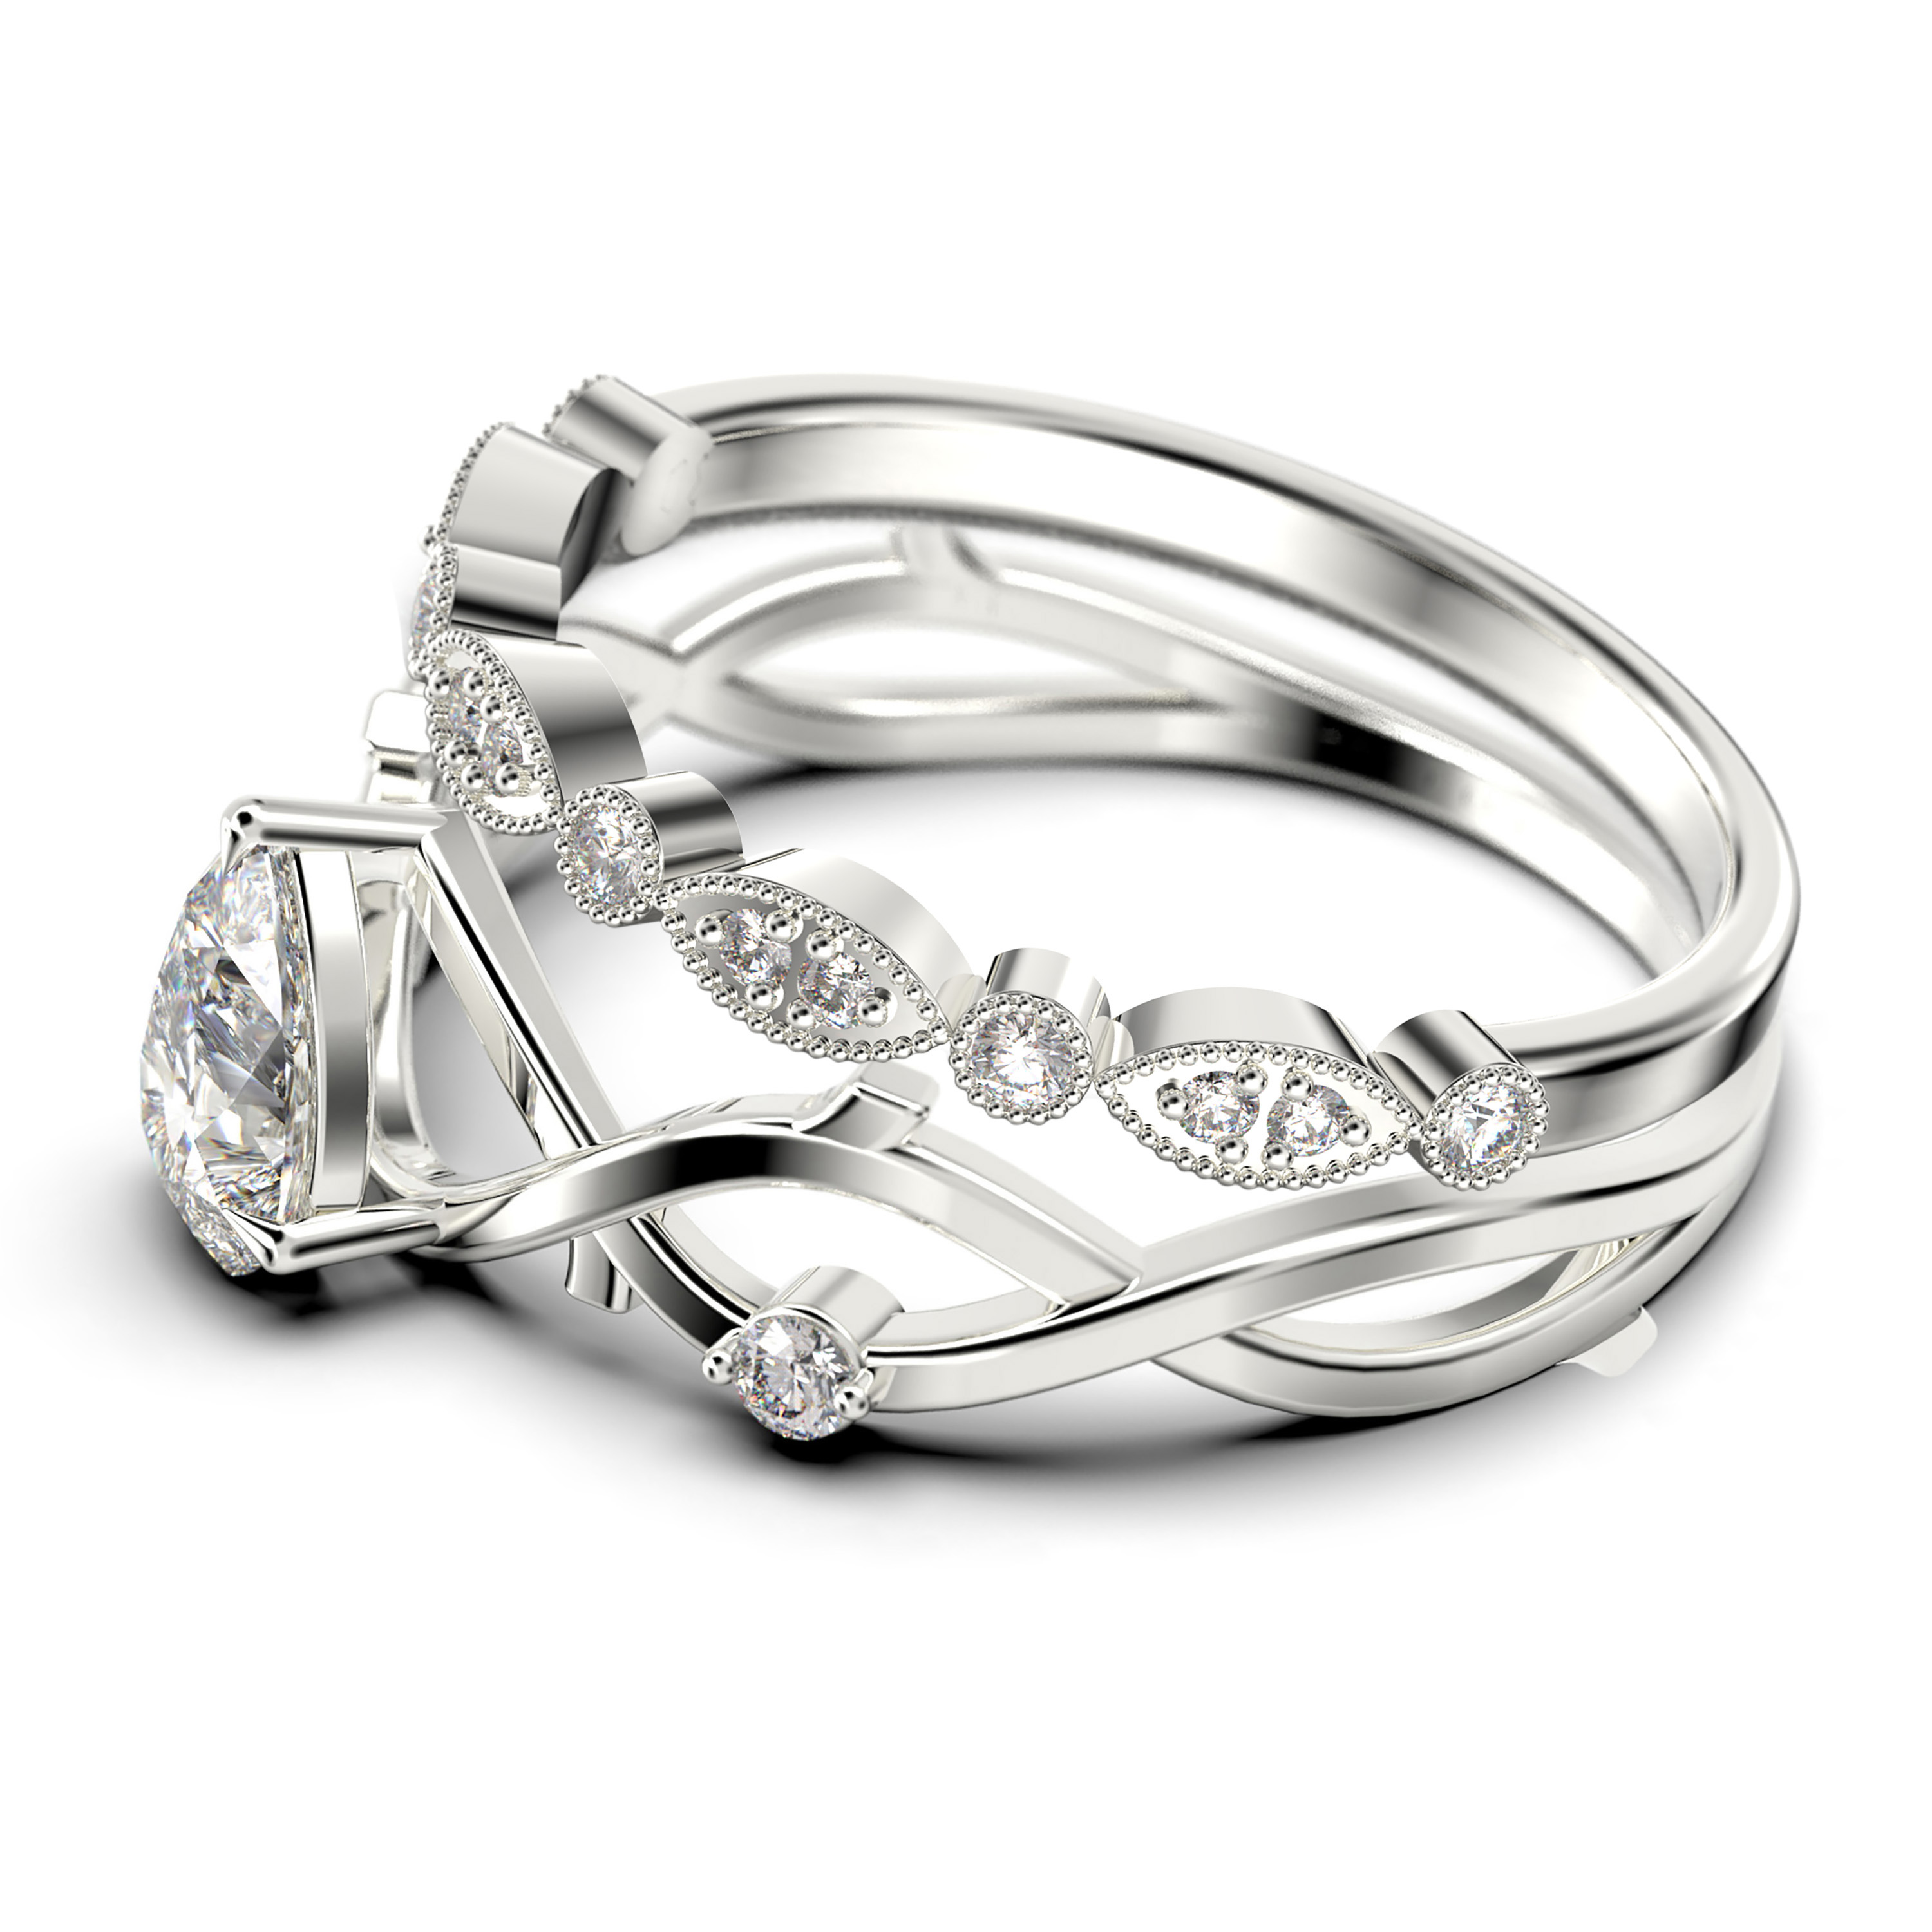 JeenJewels Boho & hippie 1.60 Carat Pear Cut Diamond Moissanite Unique Engagement Ring in 10k Solid White Gold, Bridal Set